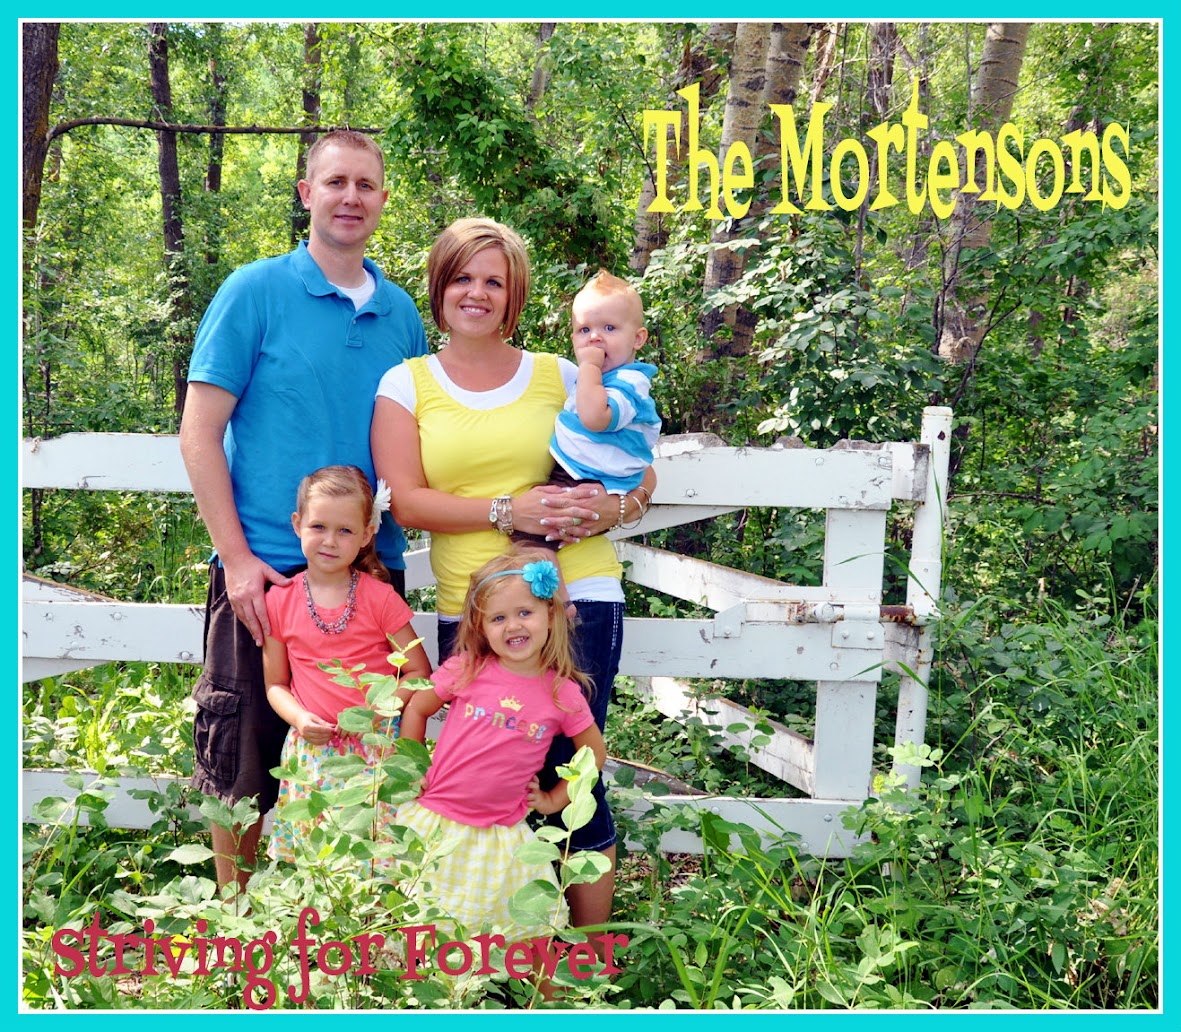 The Mortenson Family